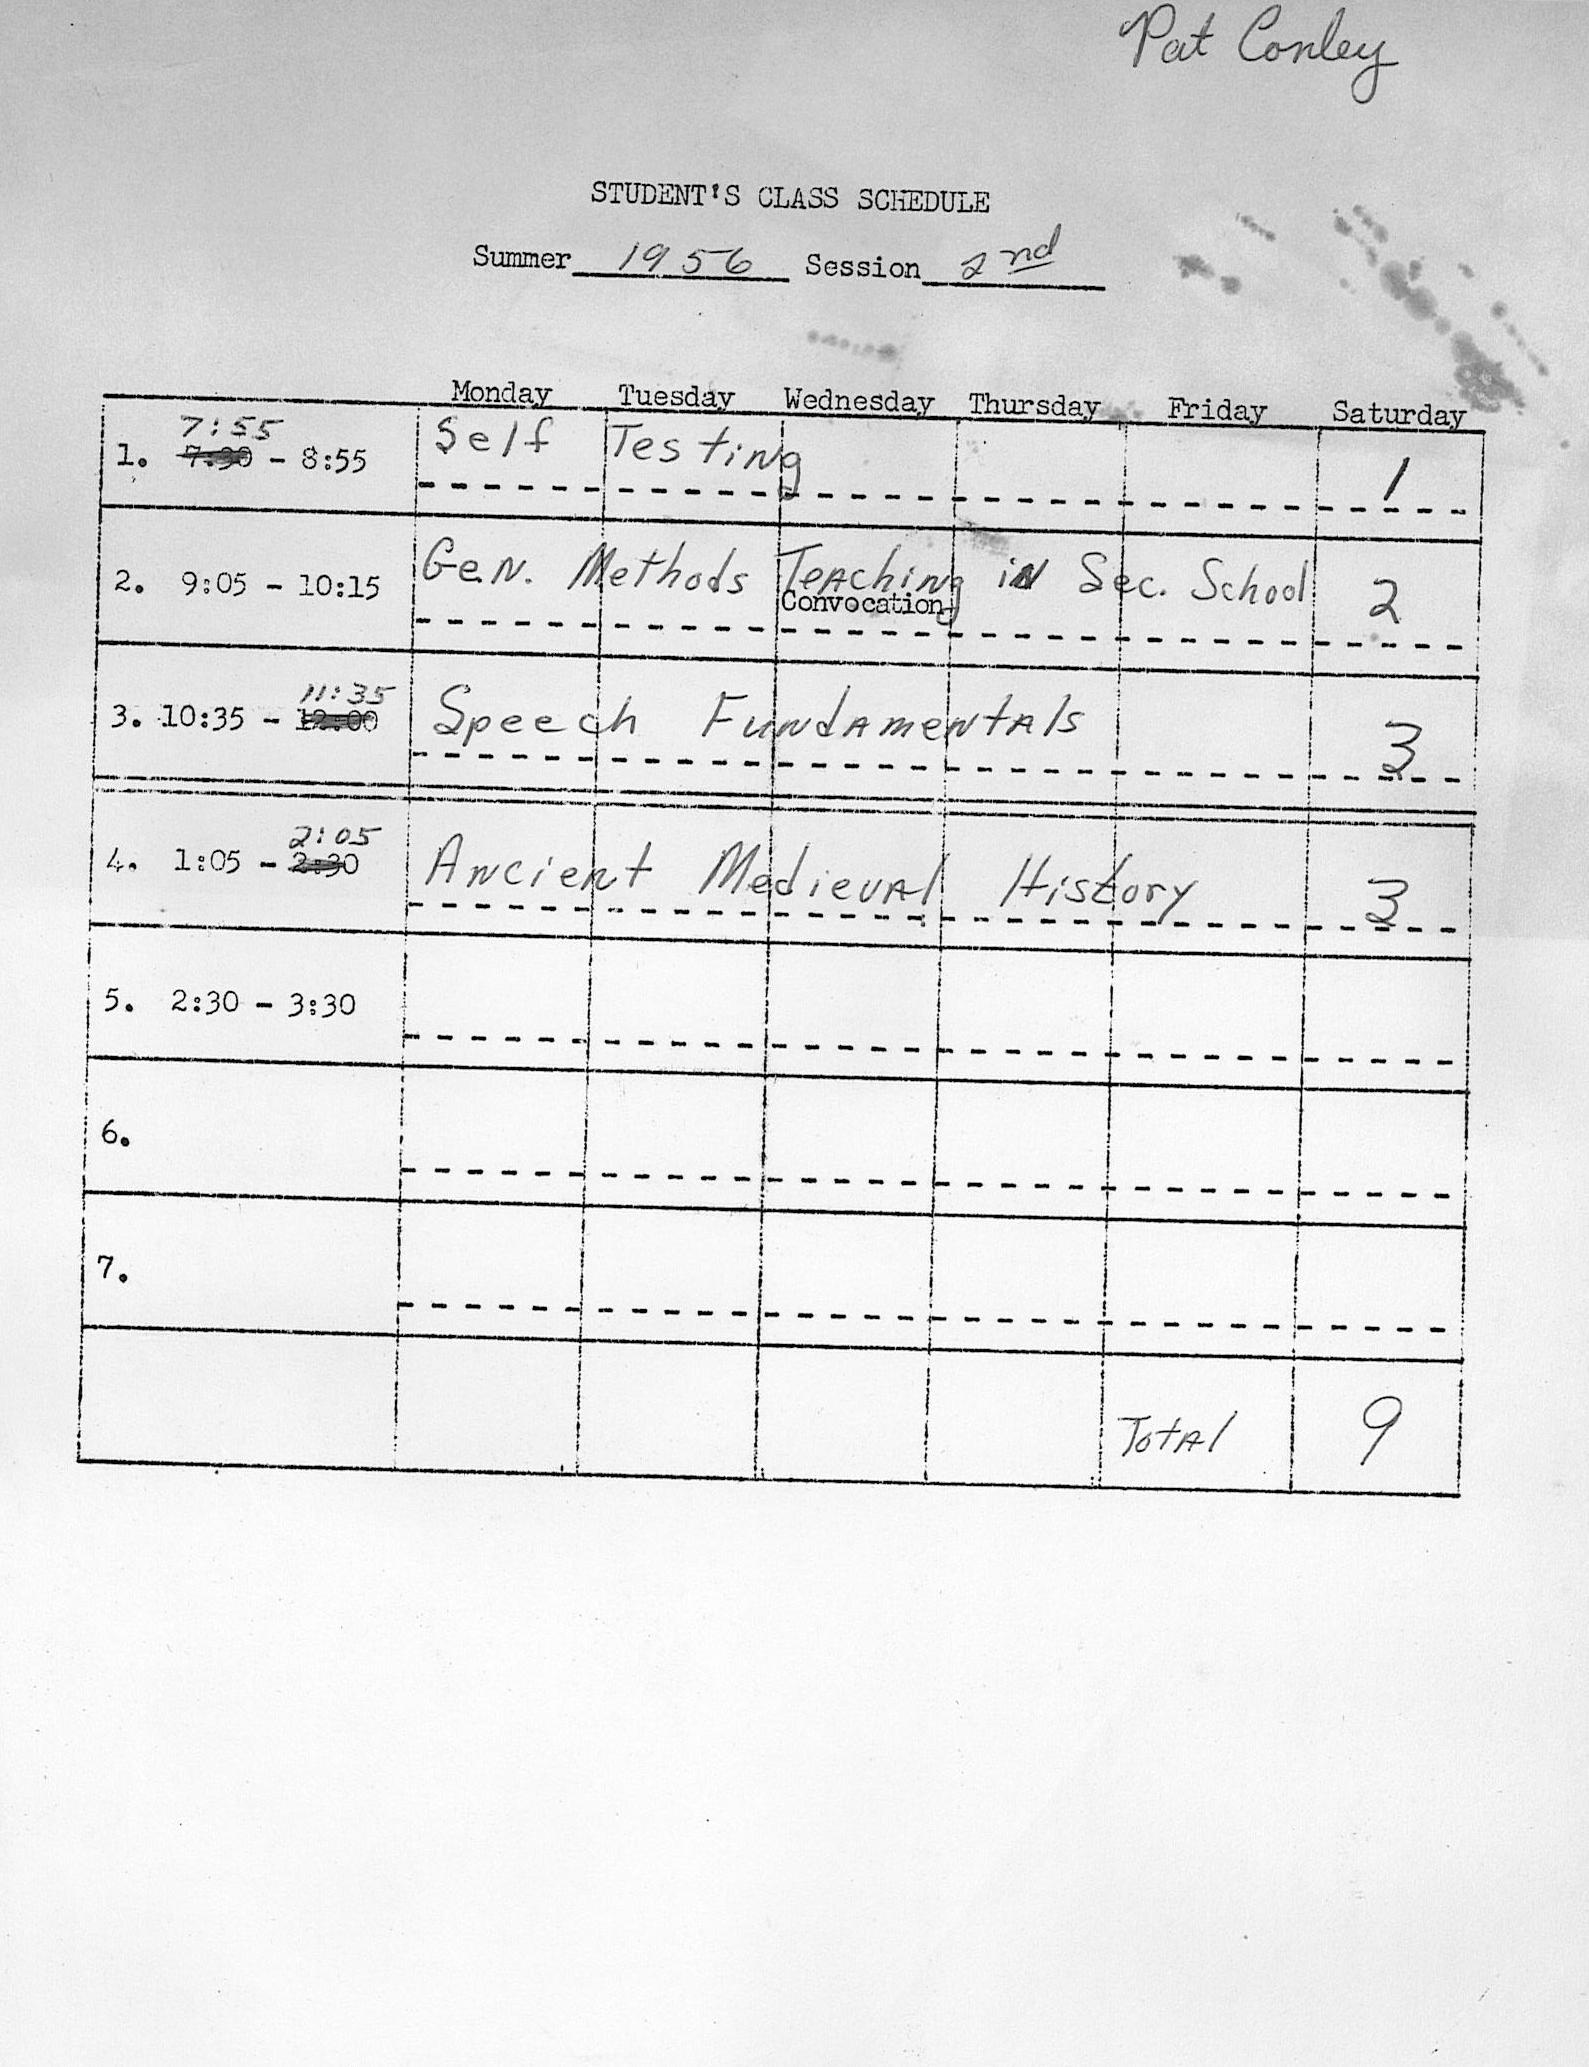 Alumna Patricia Conley's class schedule, 1956